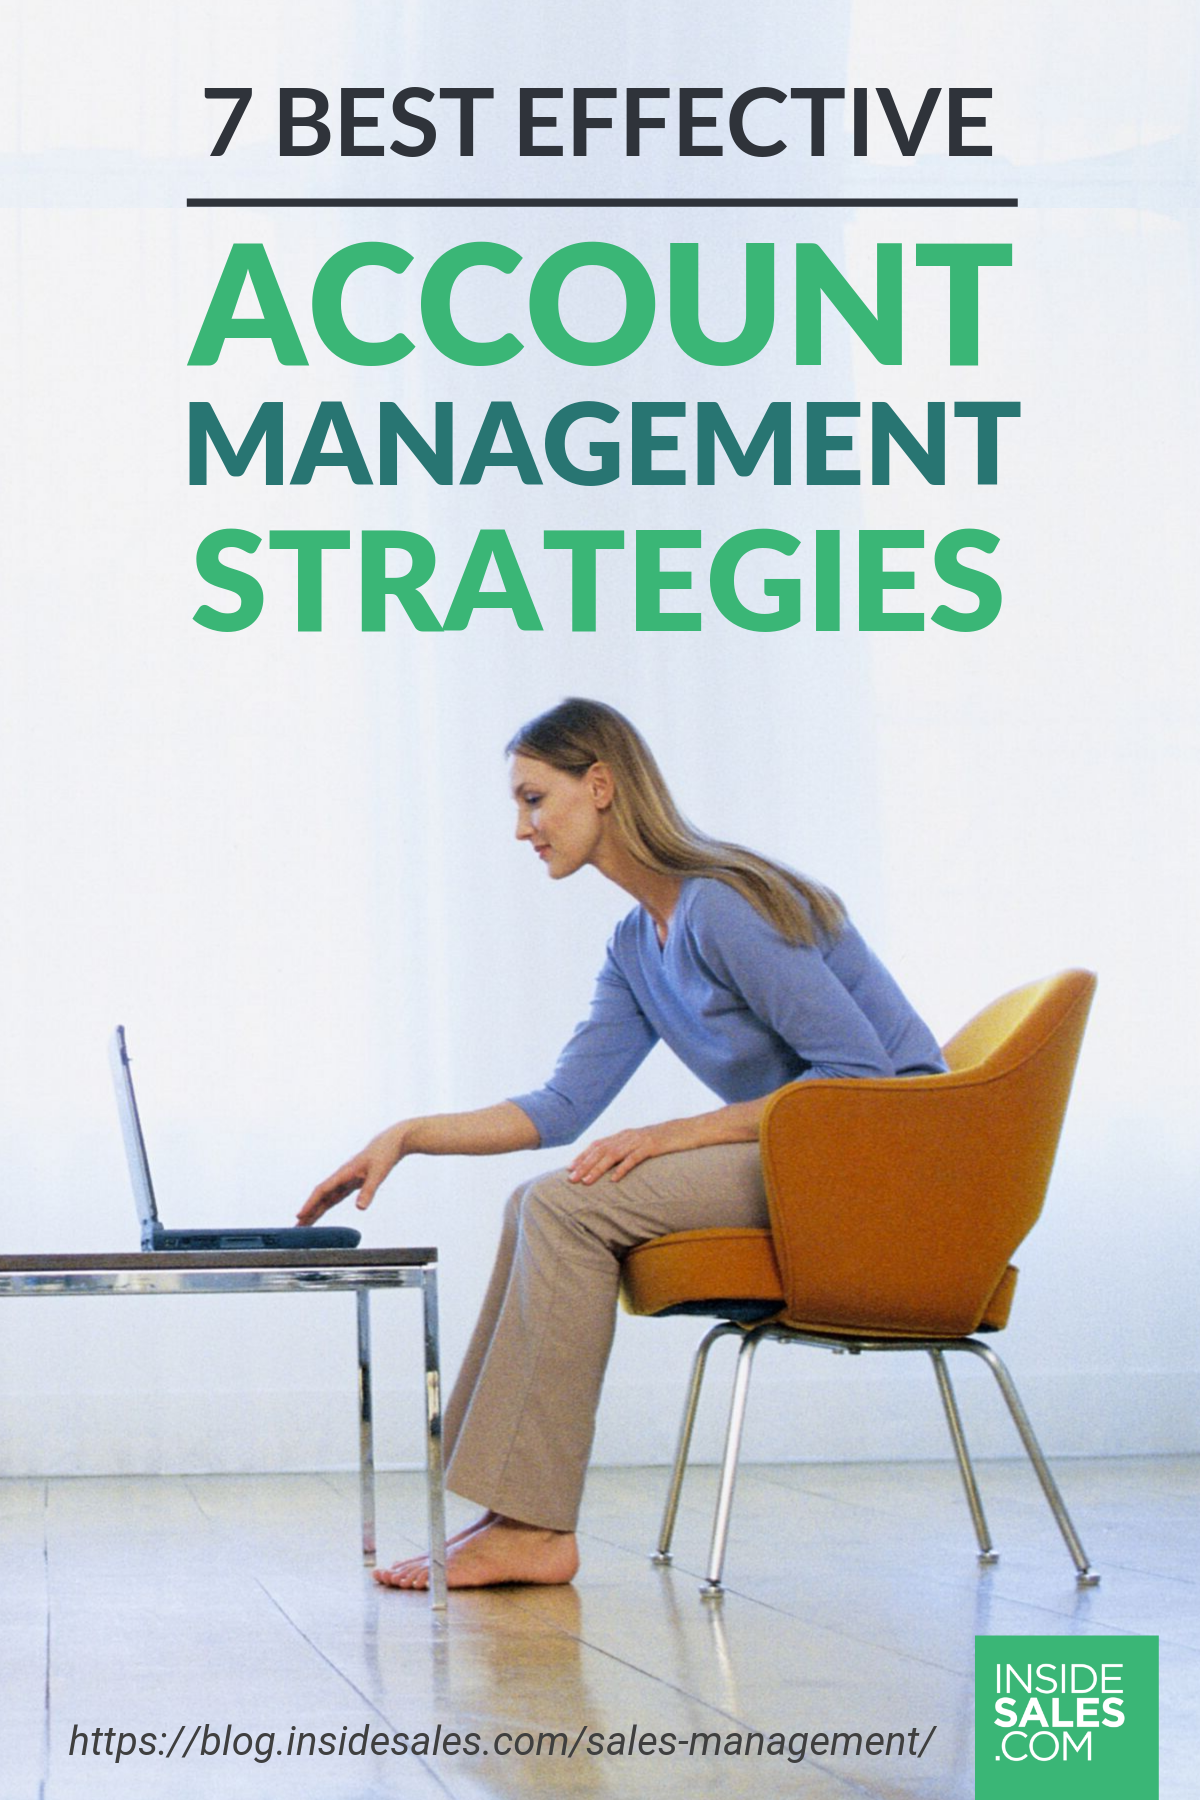 7 Best Effective Account Management Strategies https://resources.insidesales.com/blog/sales-management/management-strategies-key-accounts/